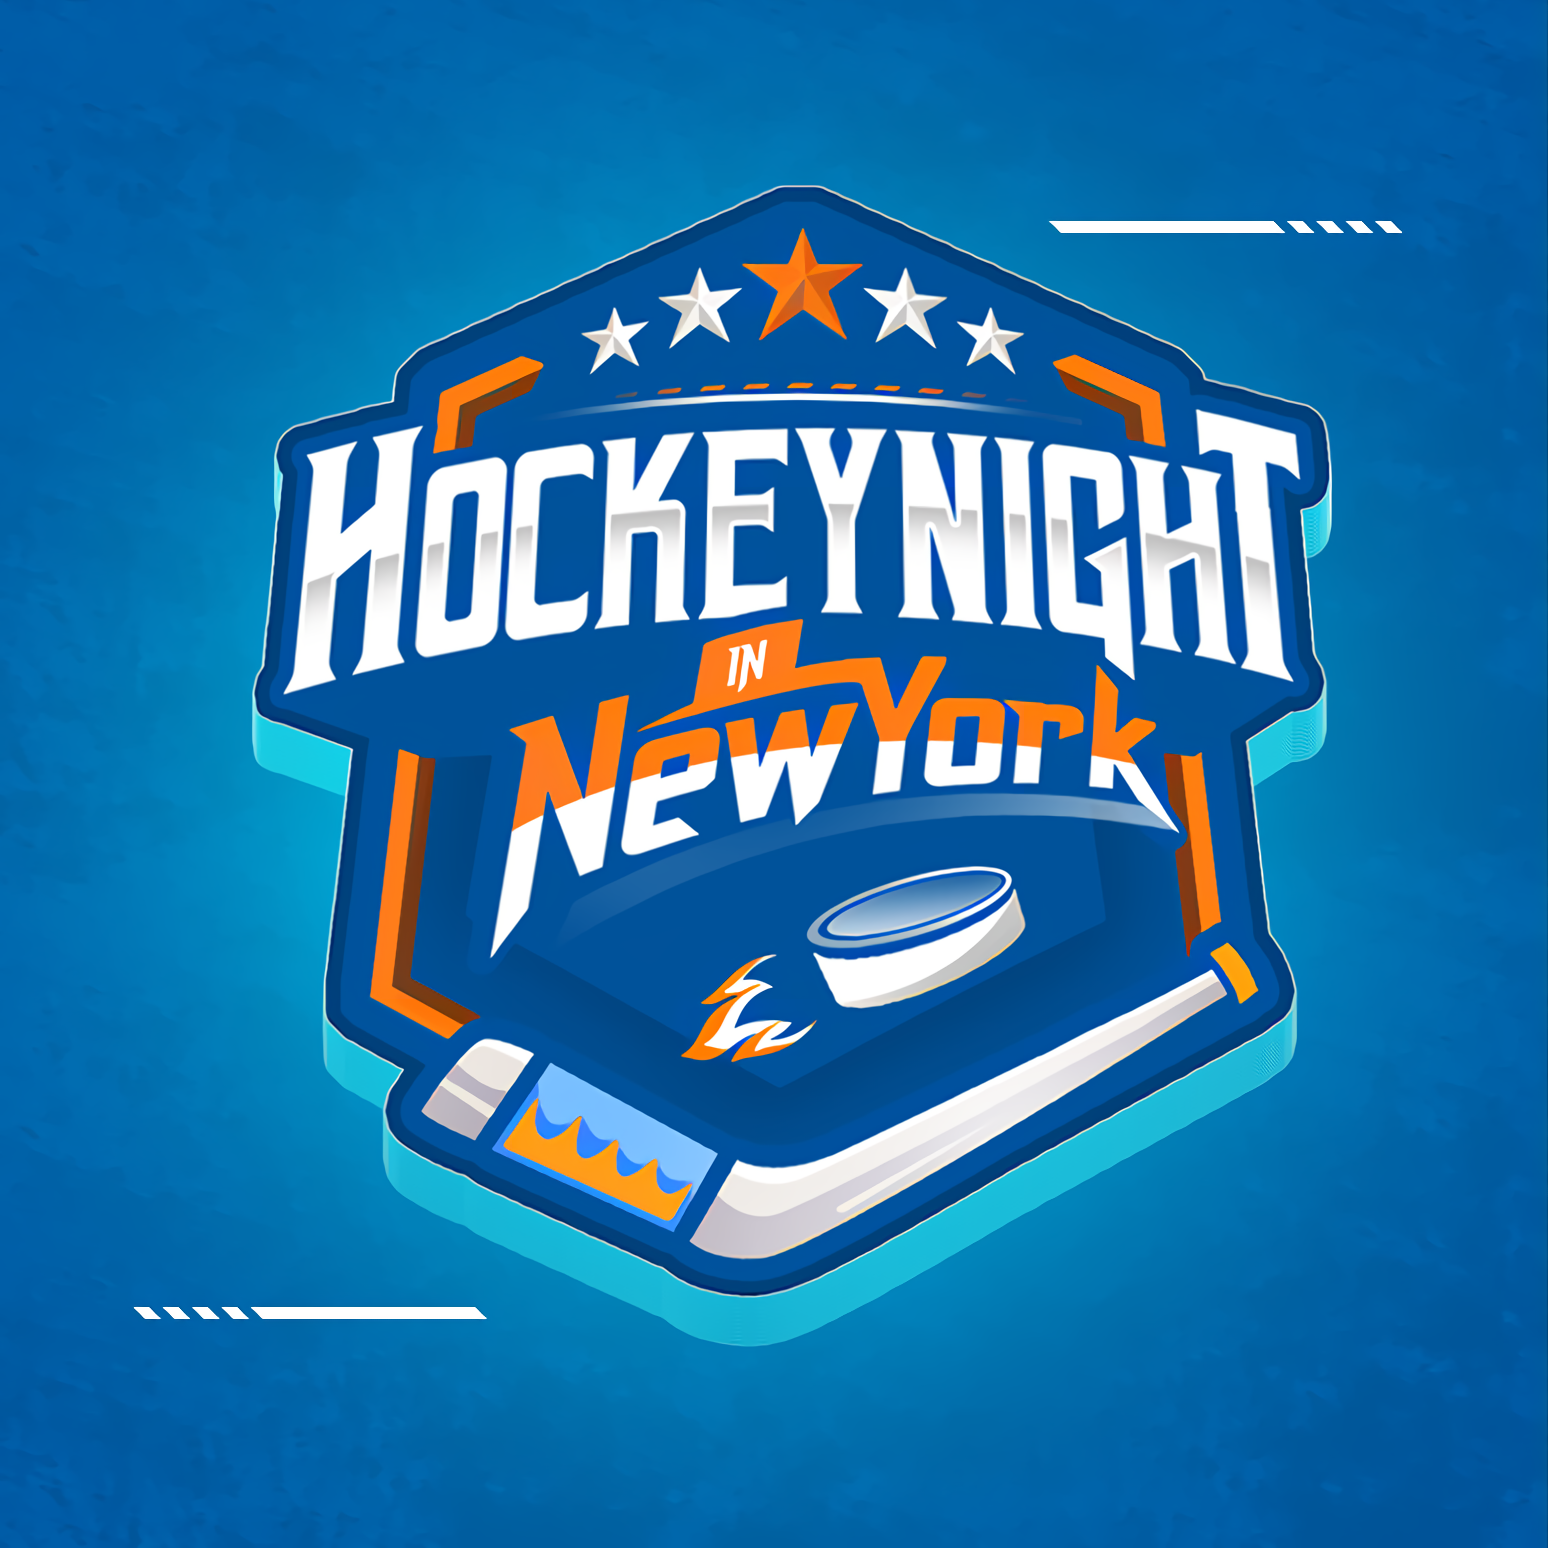 Hockey Night In New York image